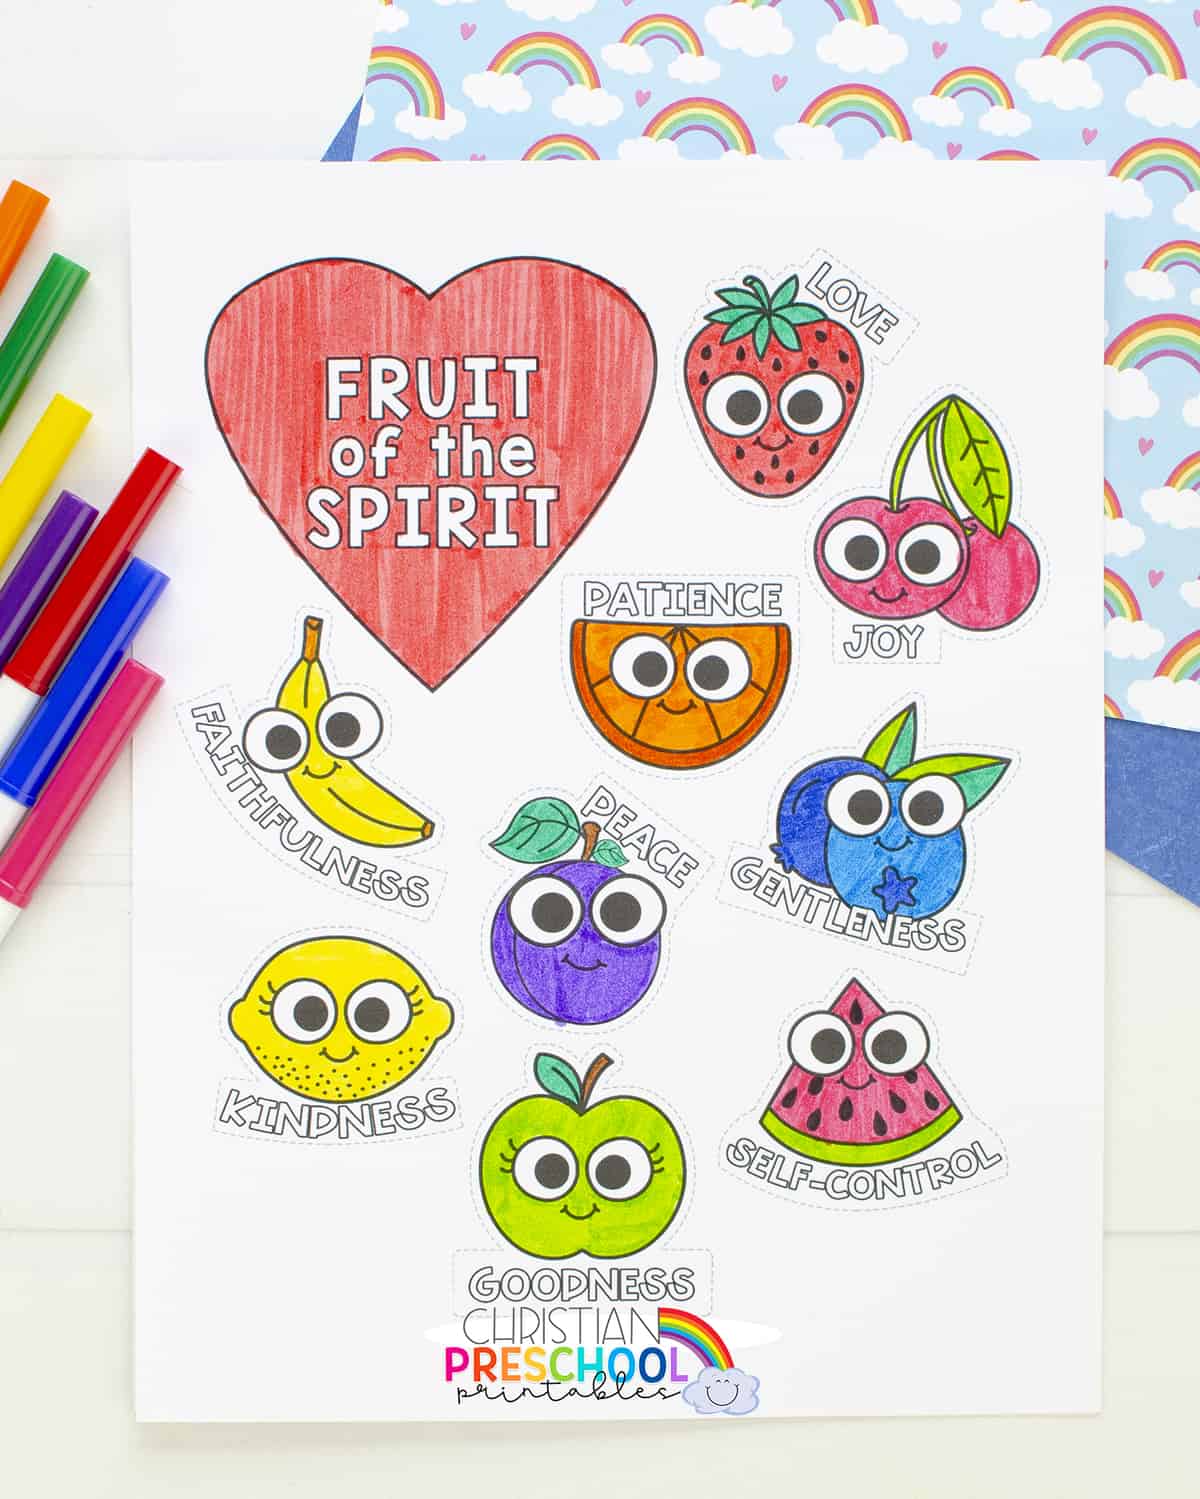 FruitoftheSpiritPrintableCrafts Christian Preschool Printables